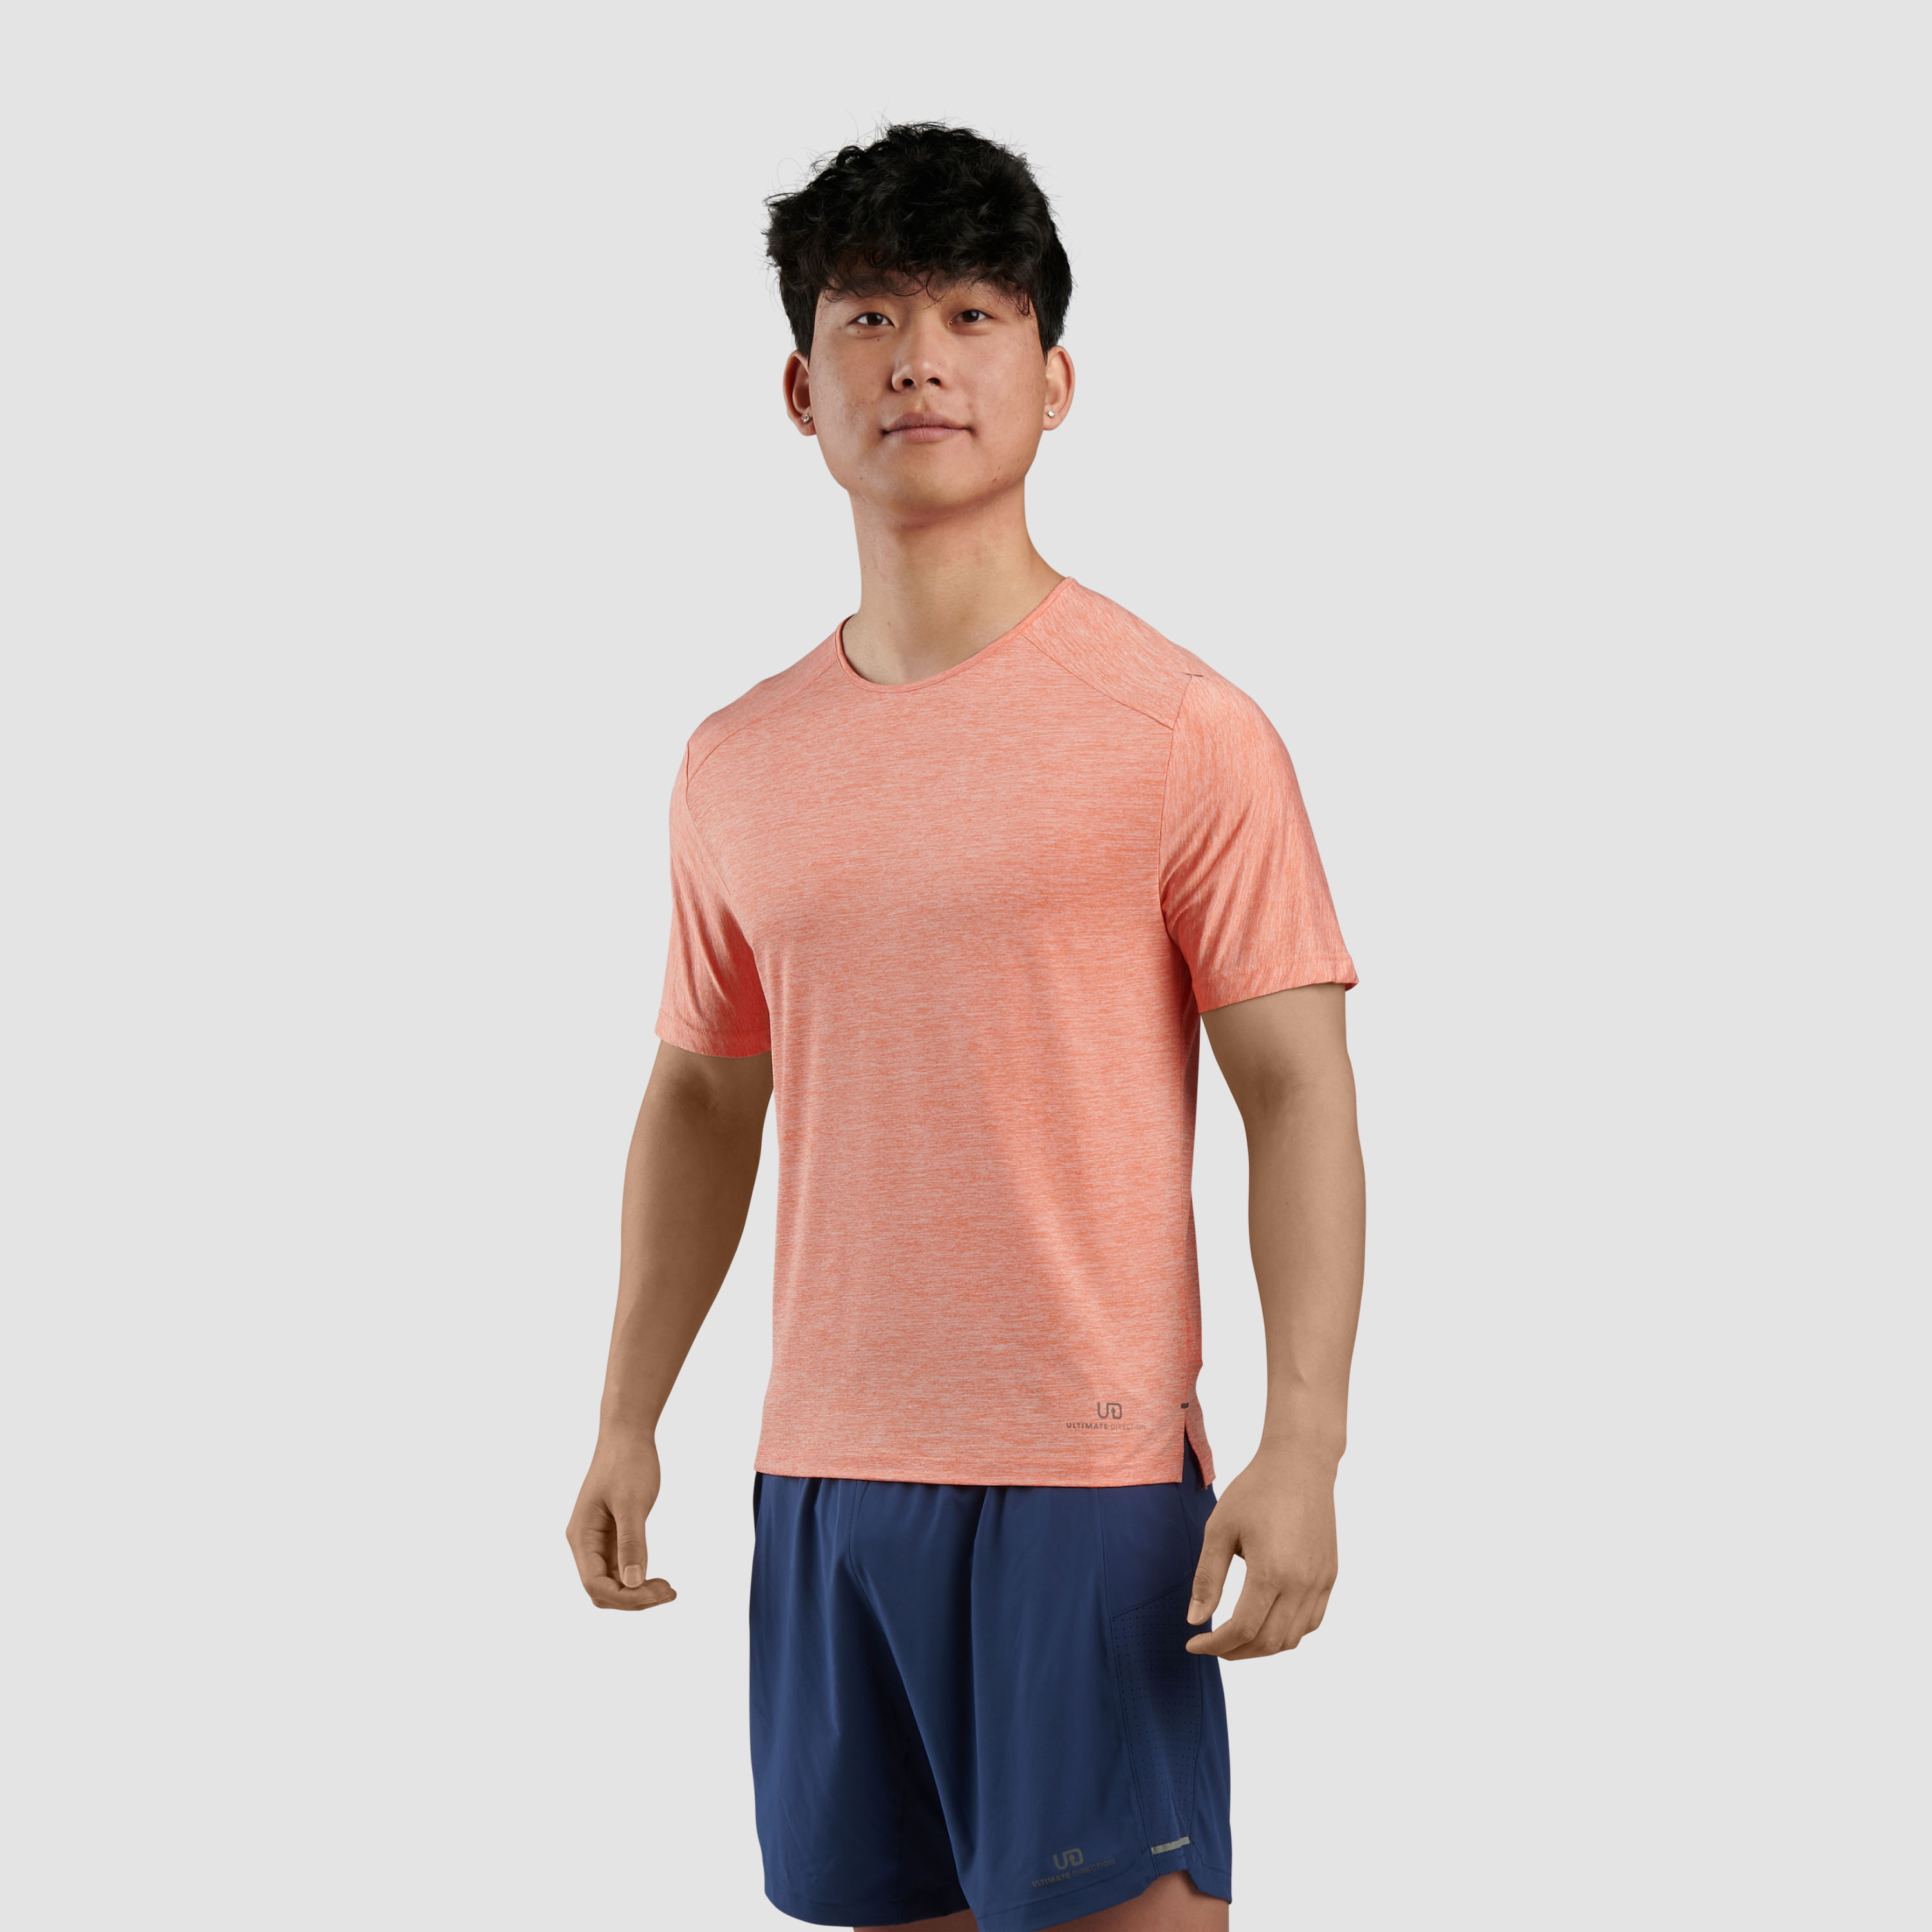 Ultimate Direction Men's Cirriform T-Shirt in Zion Size Medium